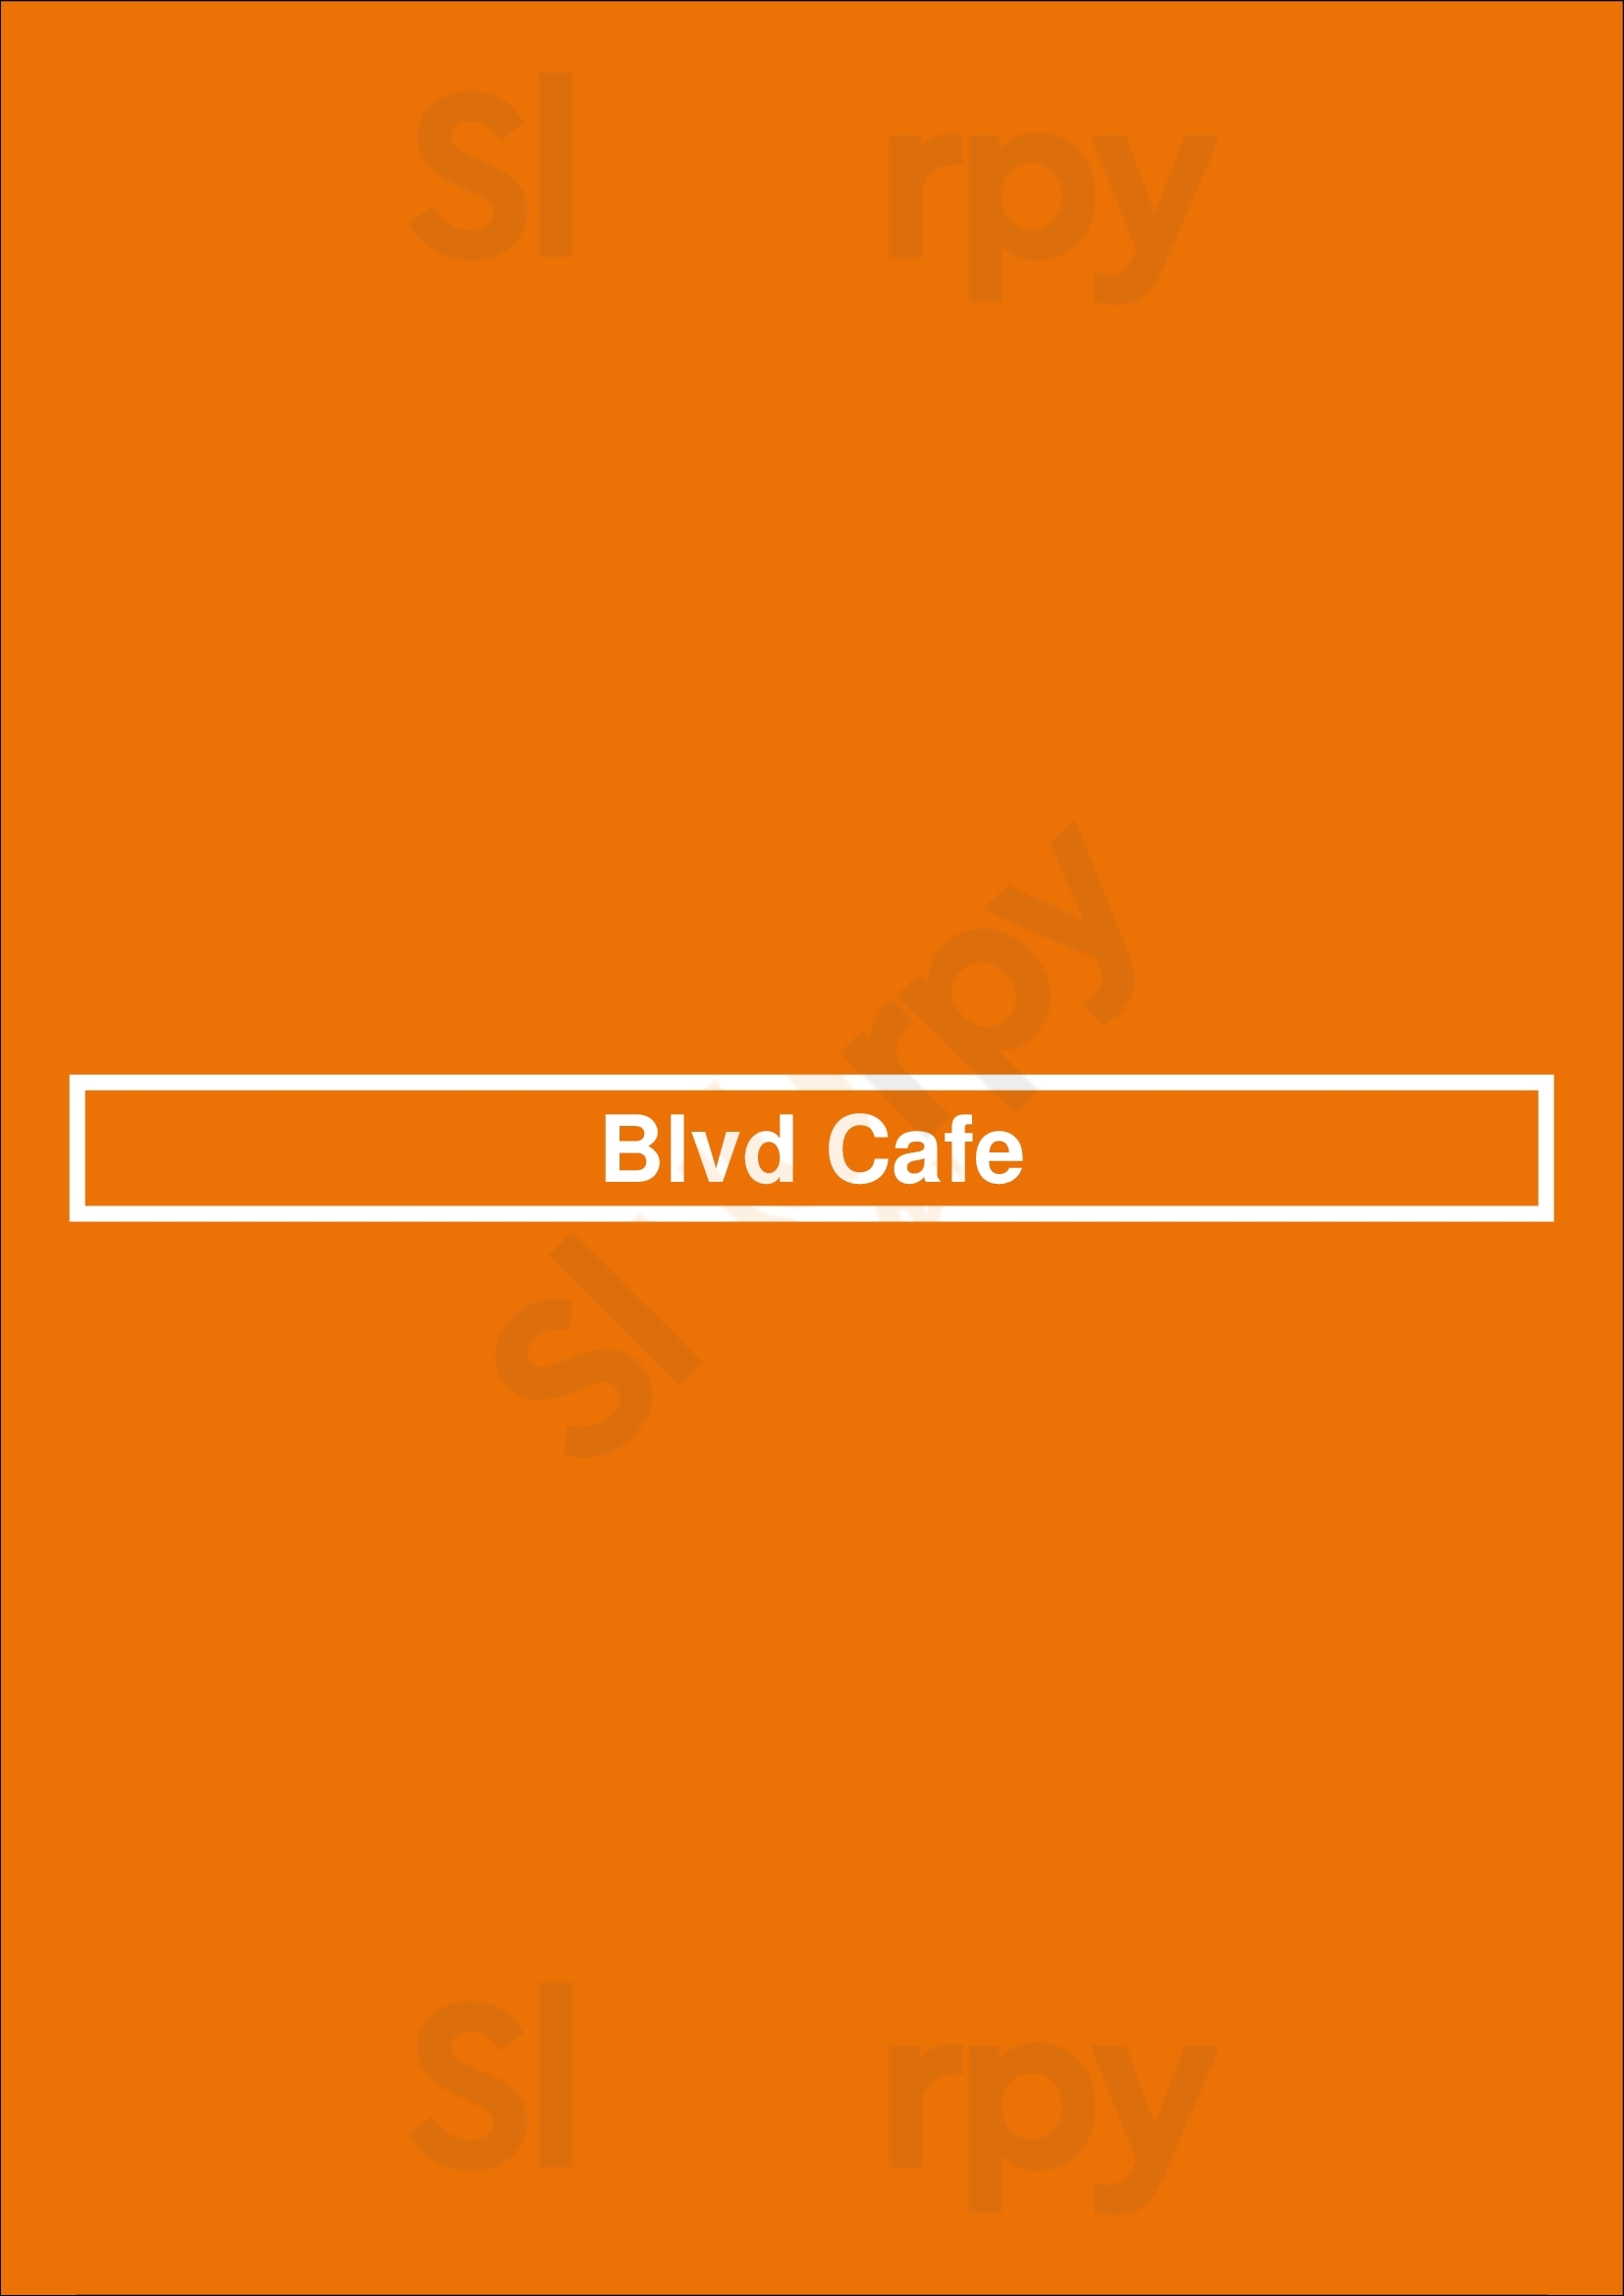 Blvd Cafe Amstelveen Menu - 1